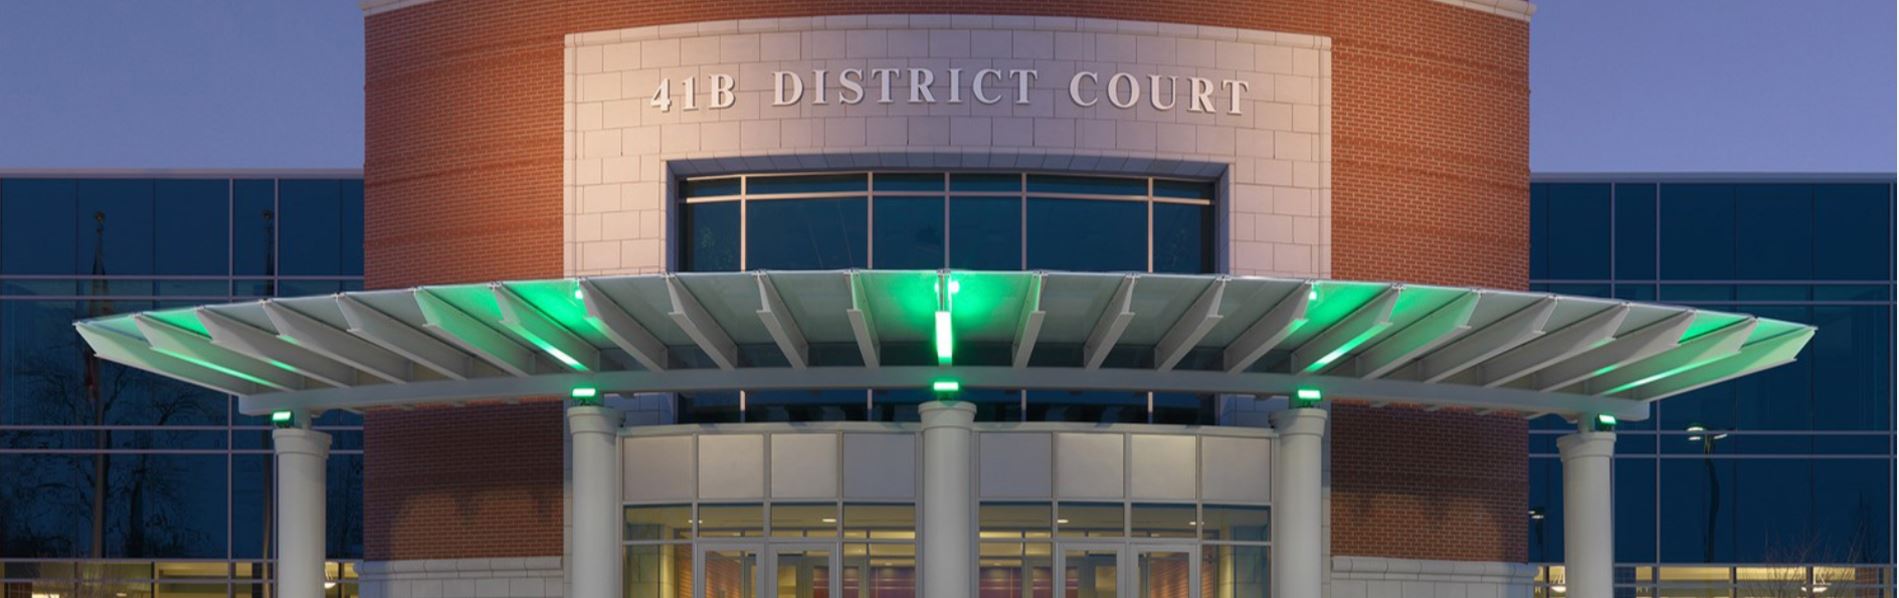 41B District Court – Clinton Township Criminal Defense Attorneys